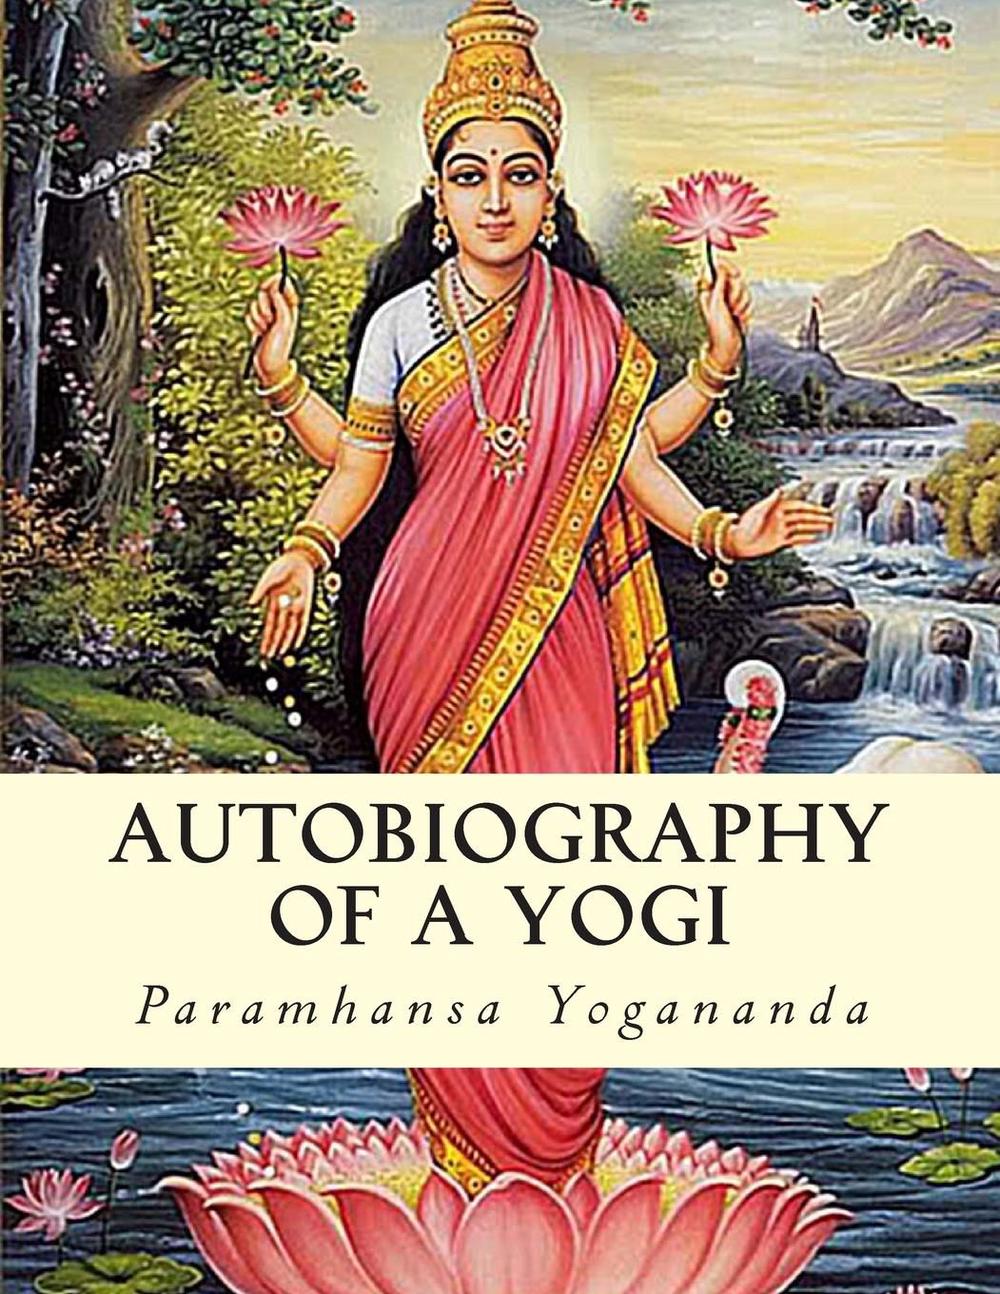 autobiography of yogi book price